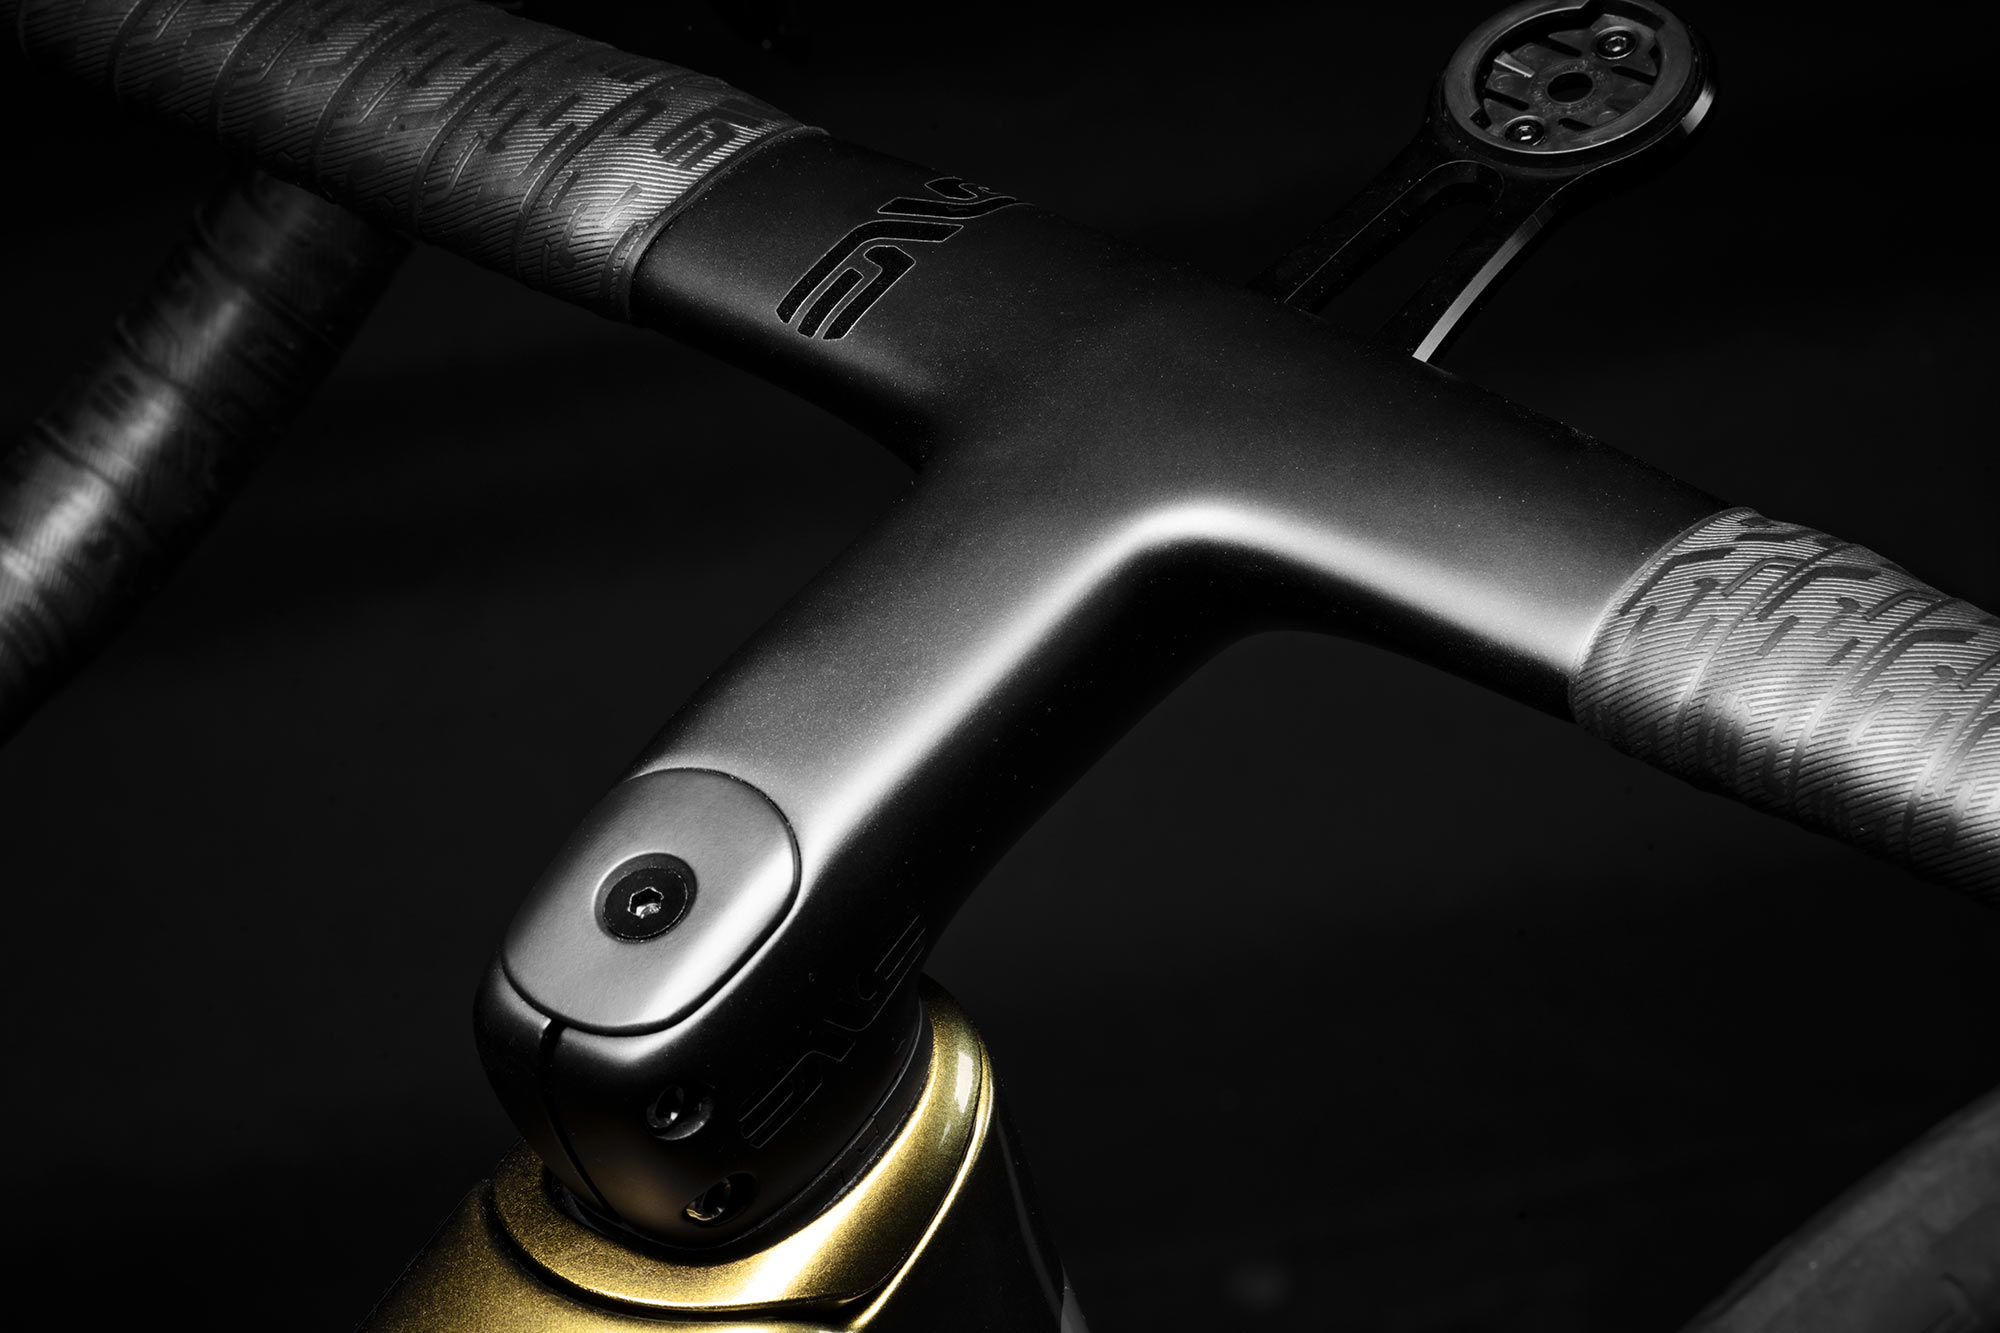 enve ses ar inroute bar stem combo shown on a bike